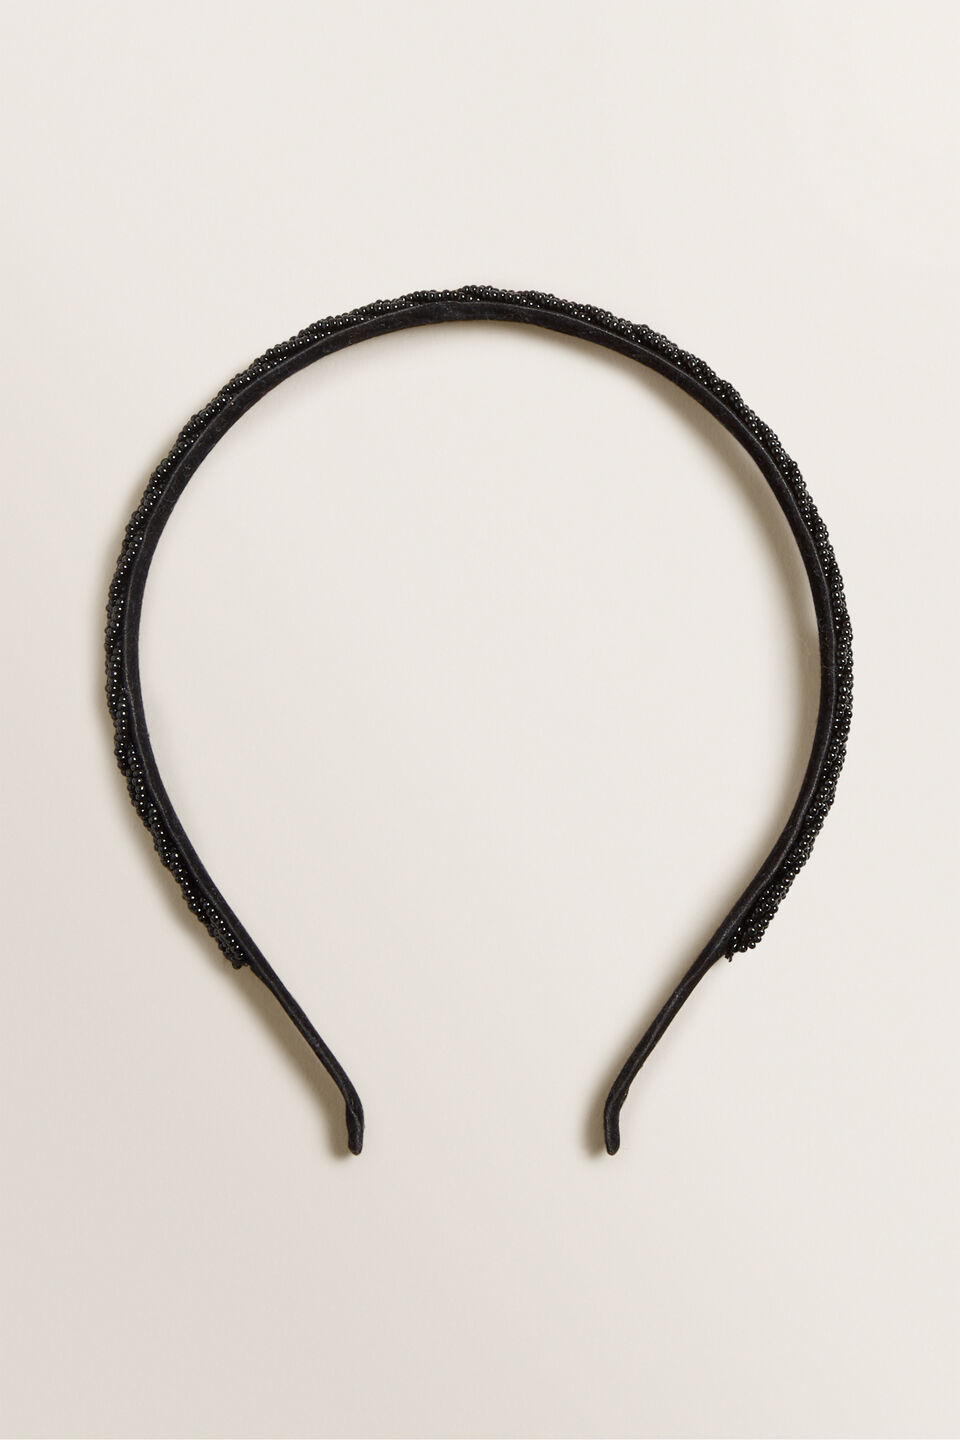 Bead Headband  